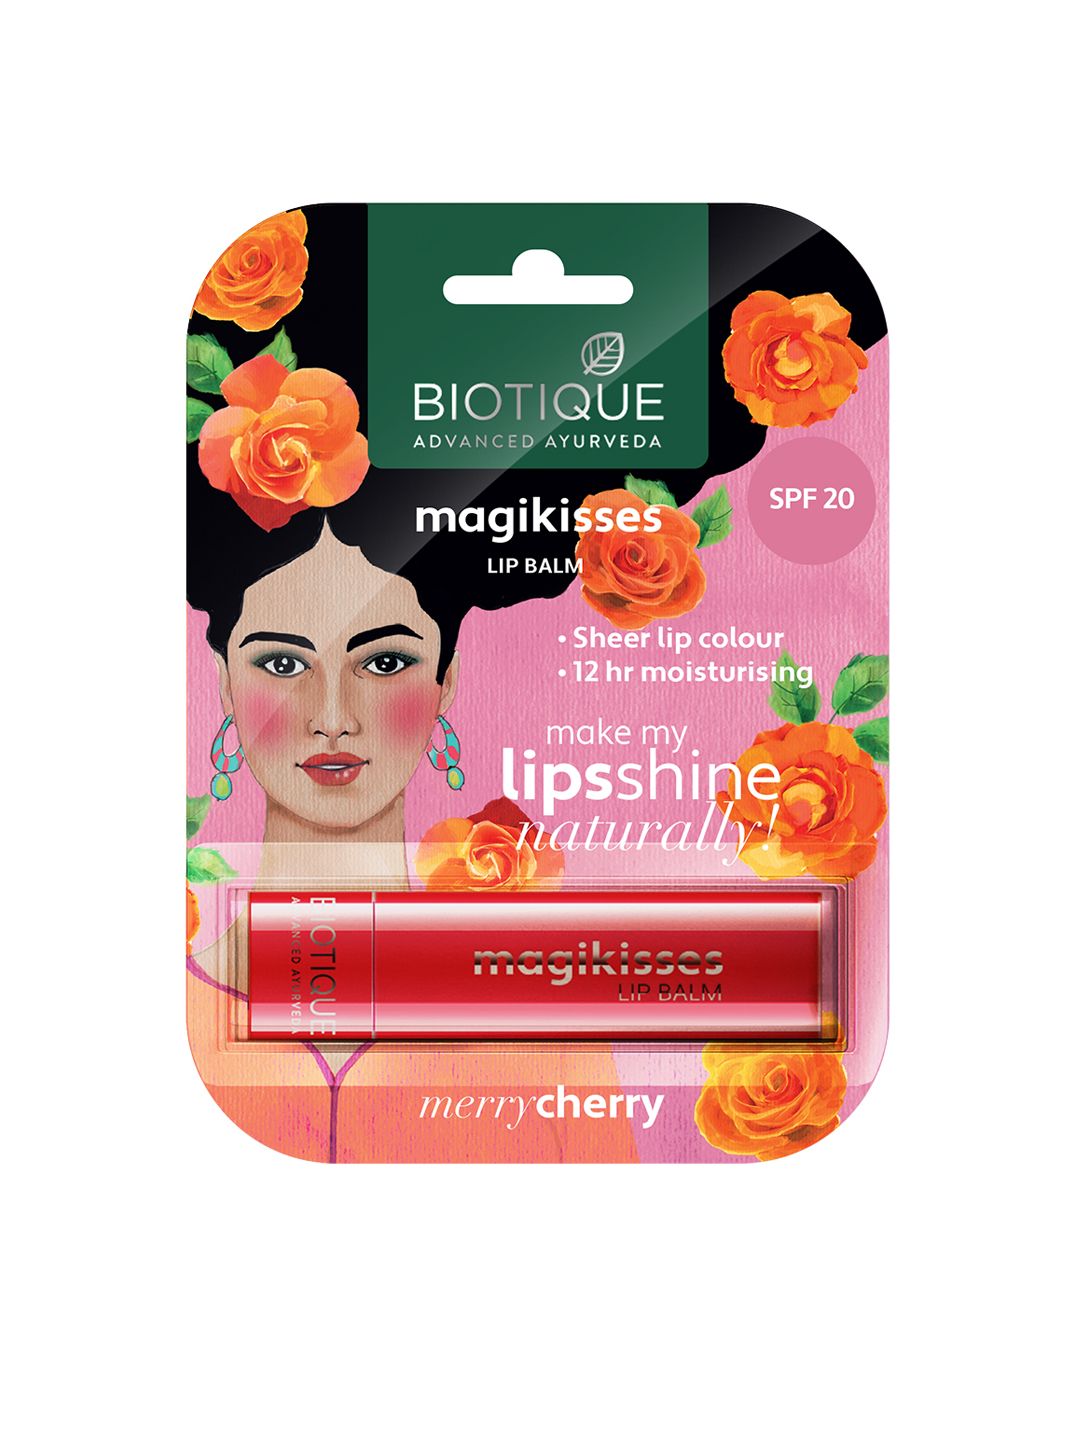 Biotique Magikisses SPF 20 Moisturising Sheer Lip Balm - Merry Cherry Price in India